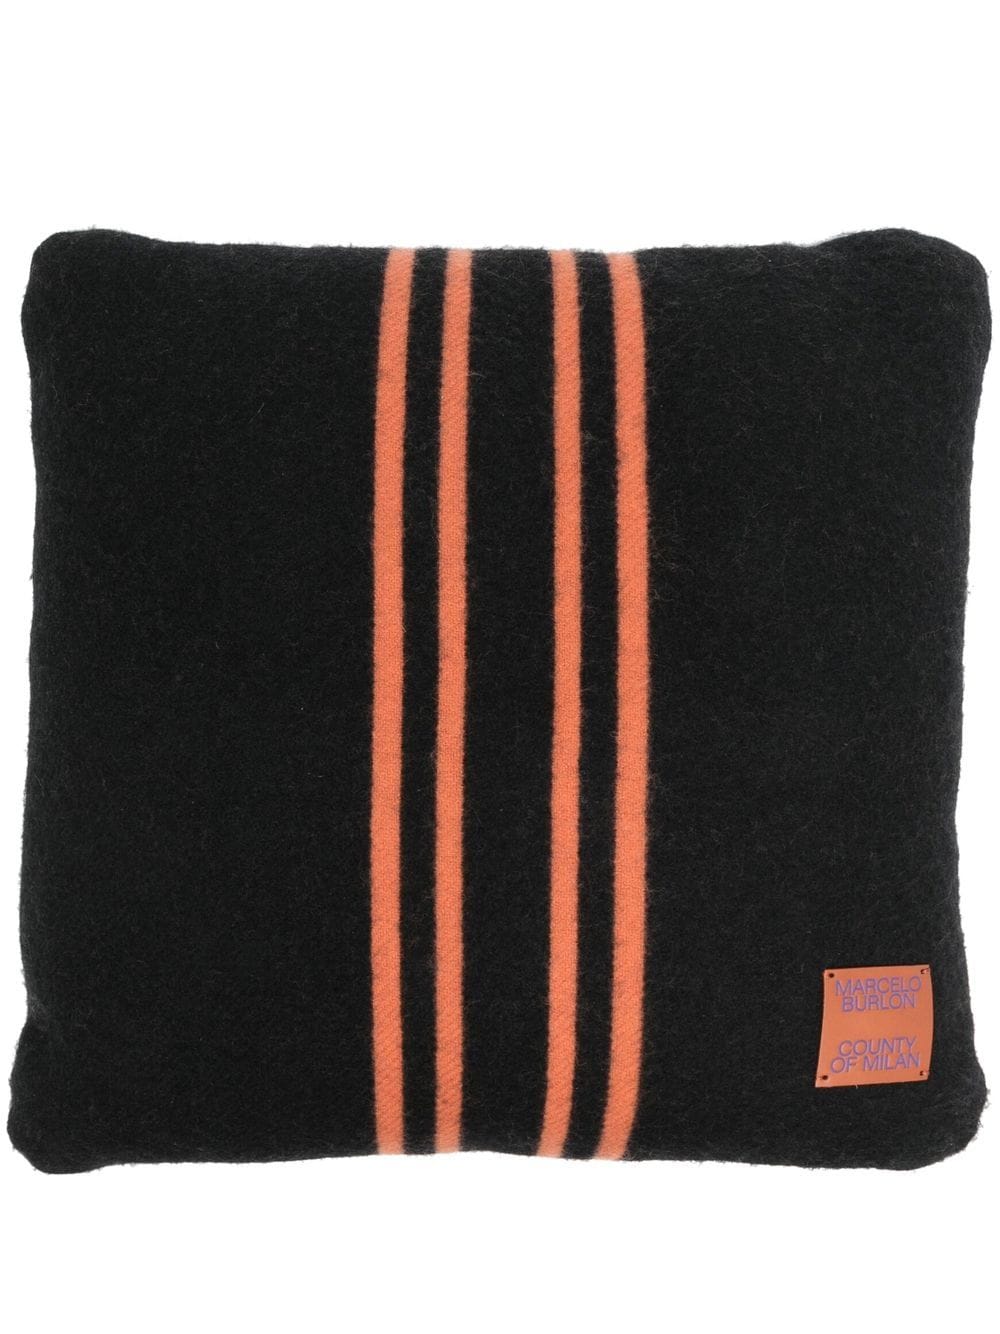 Marcelo Burlon County of Milan Rural Cross motif pillow - Orange von Marcelo Burlon County of Milan